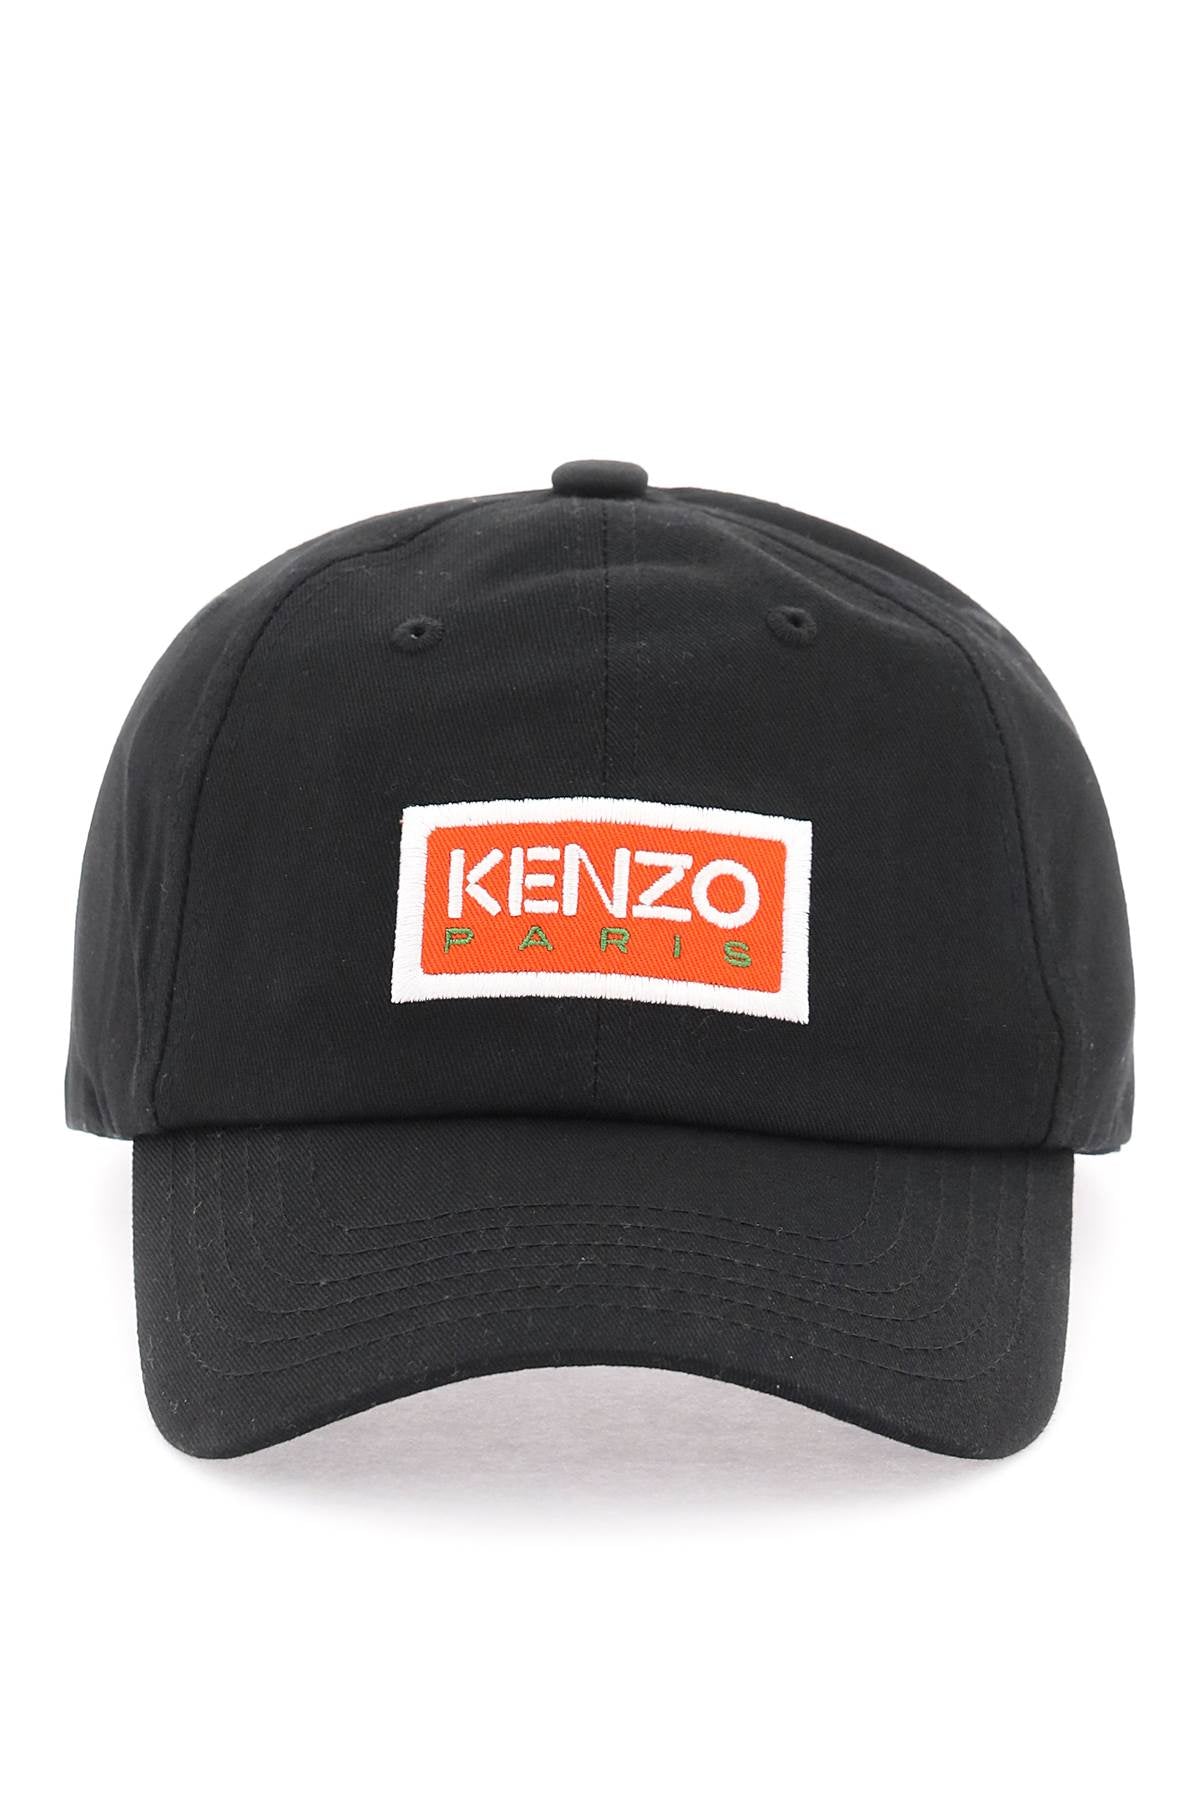 Kenzo logo baseball cap-0